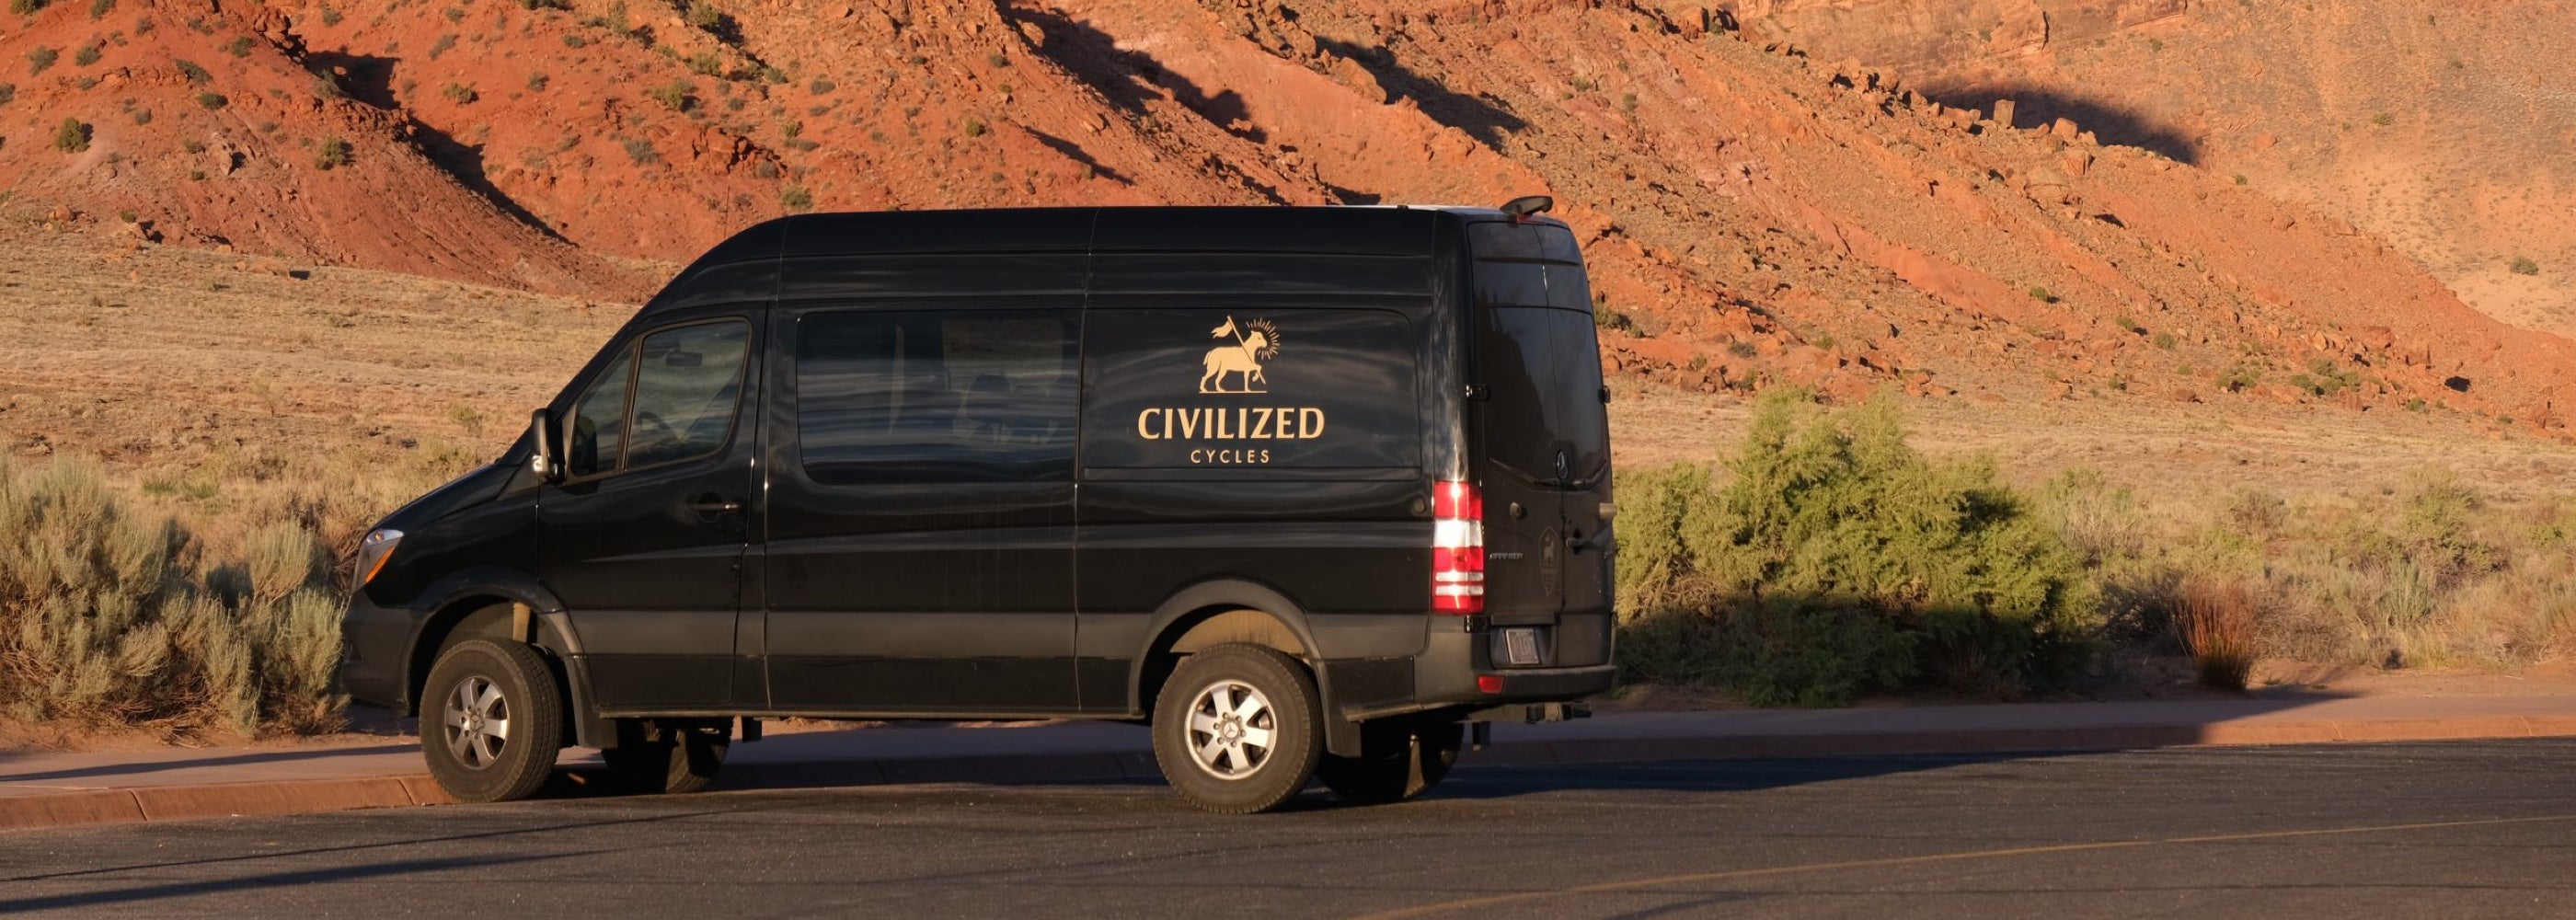 A Civ branded black van parked in the southwestern desert.